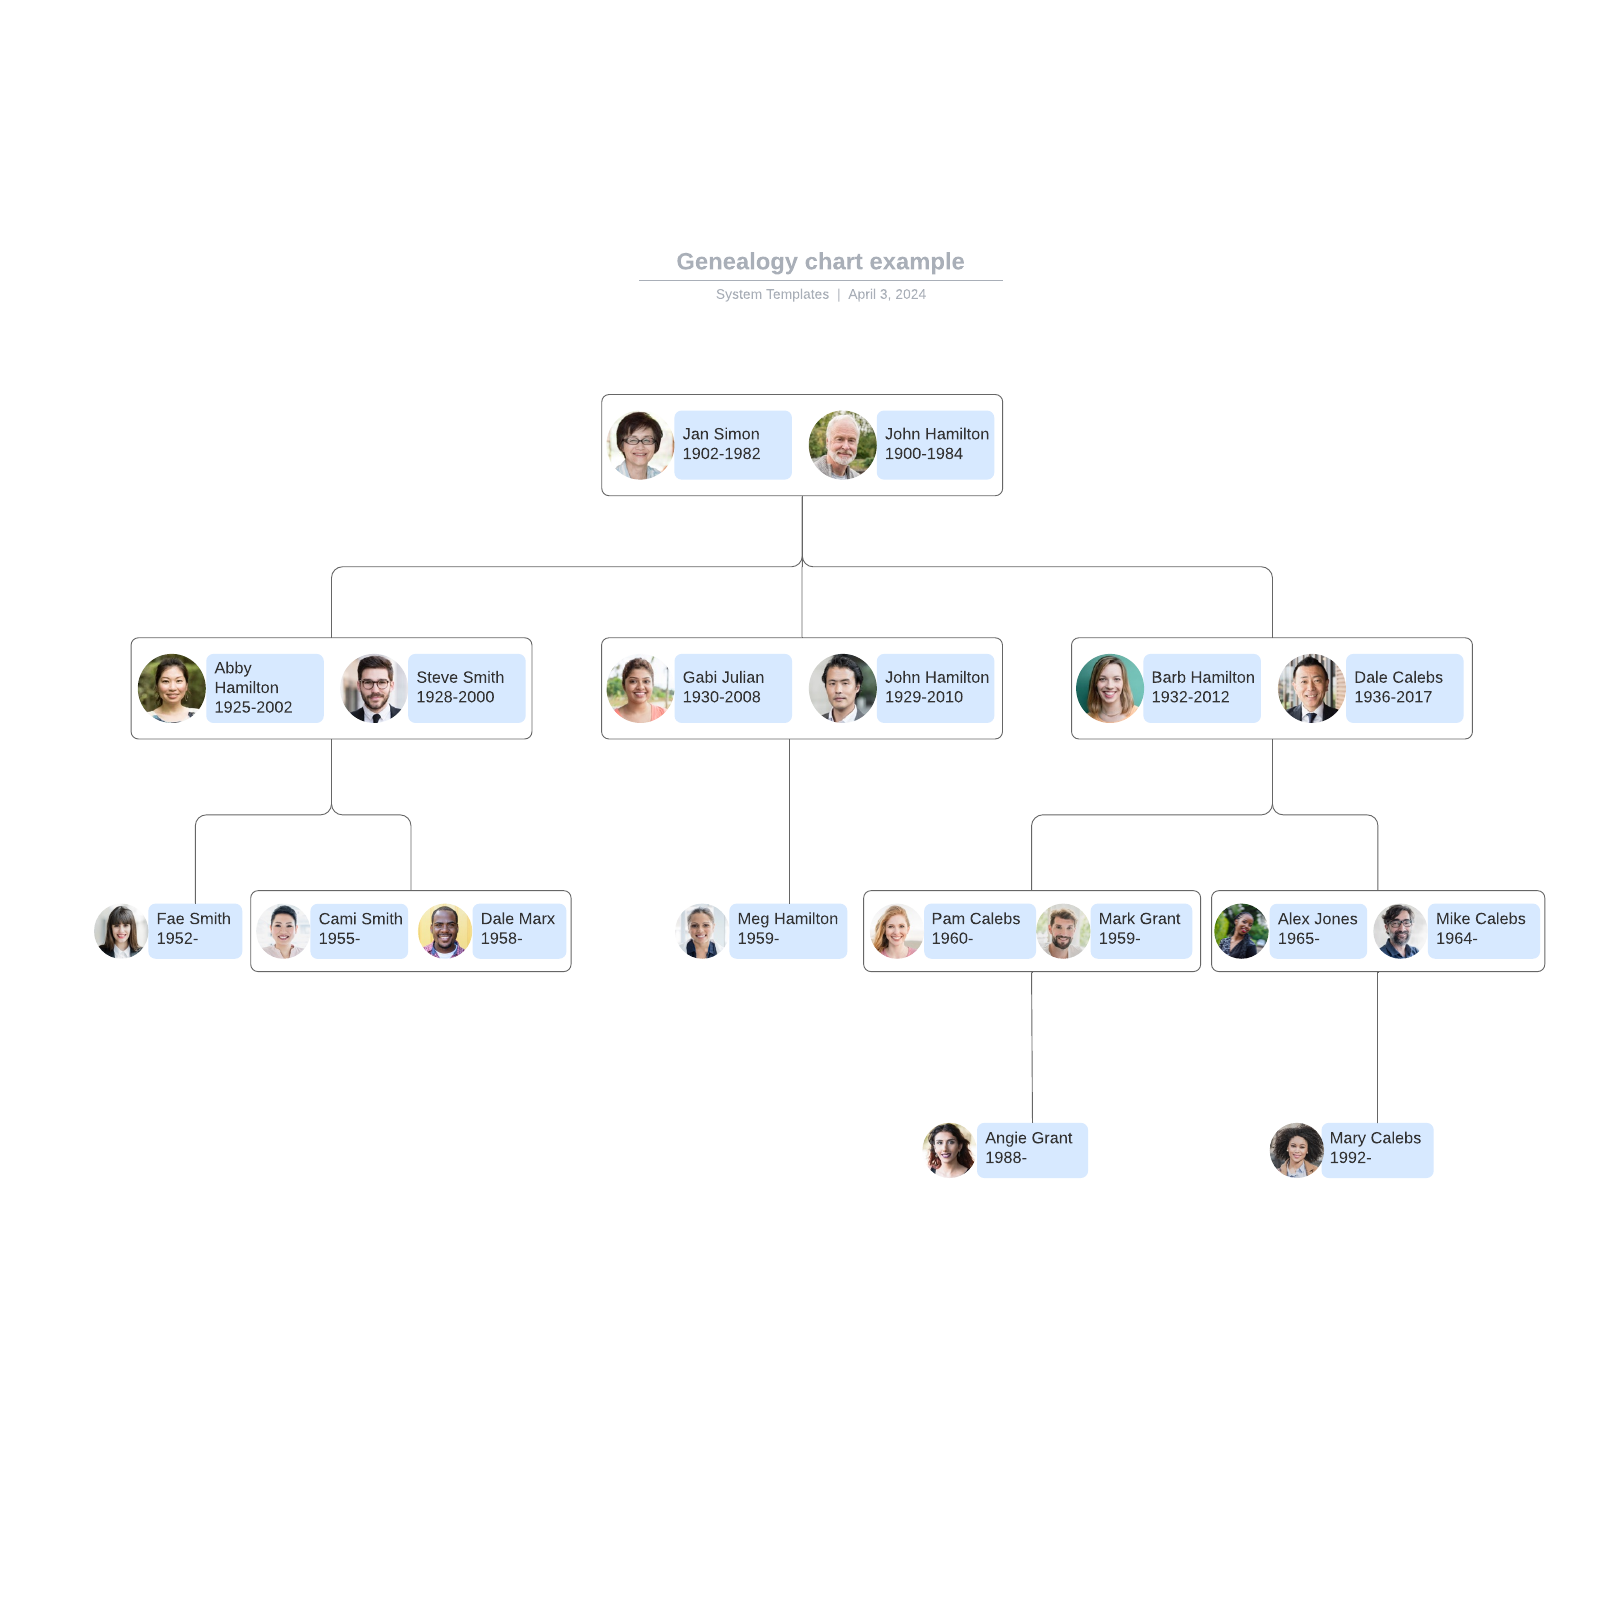 Genealogy chart example example